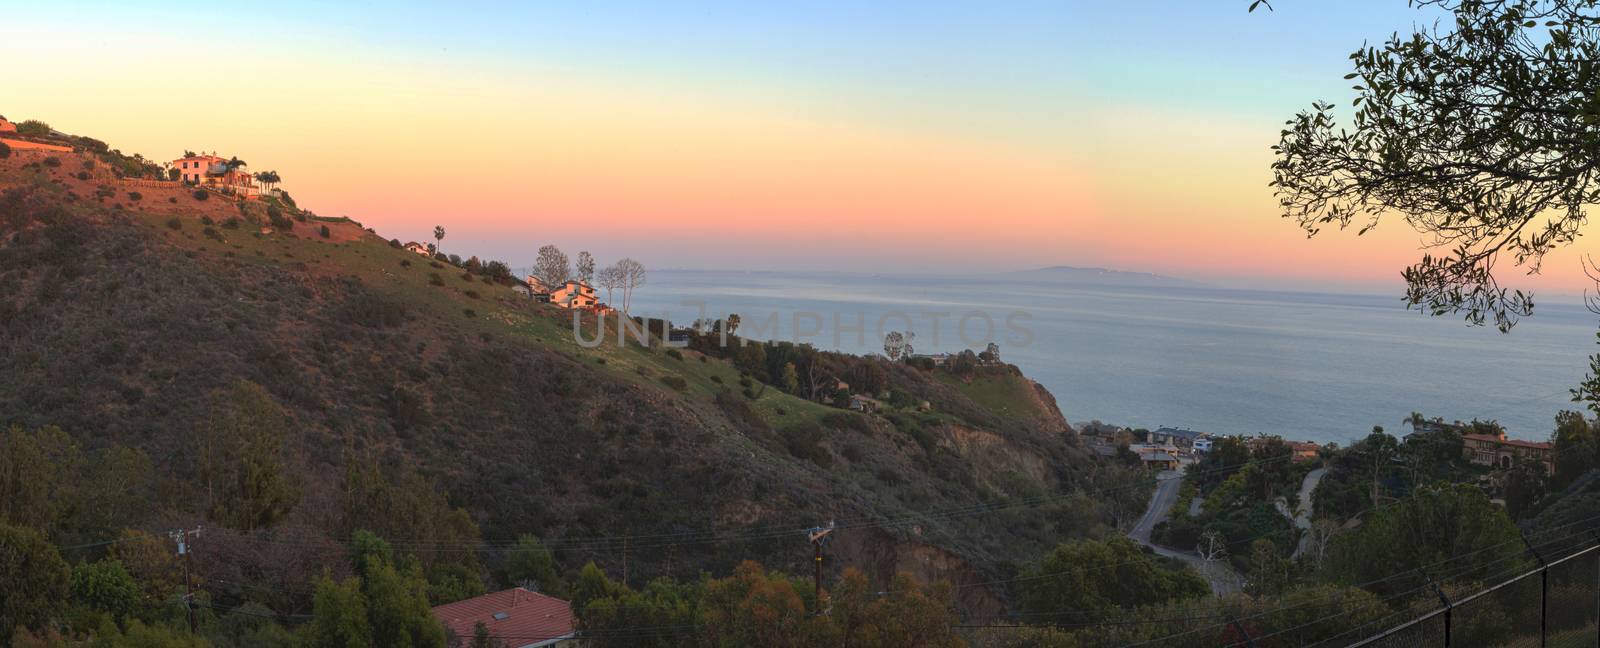 Malibu hillside at sunset above the Pacific Ocean coastline in California, United States.